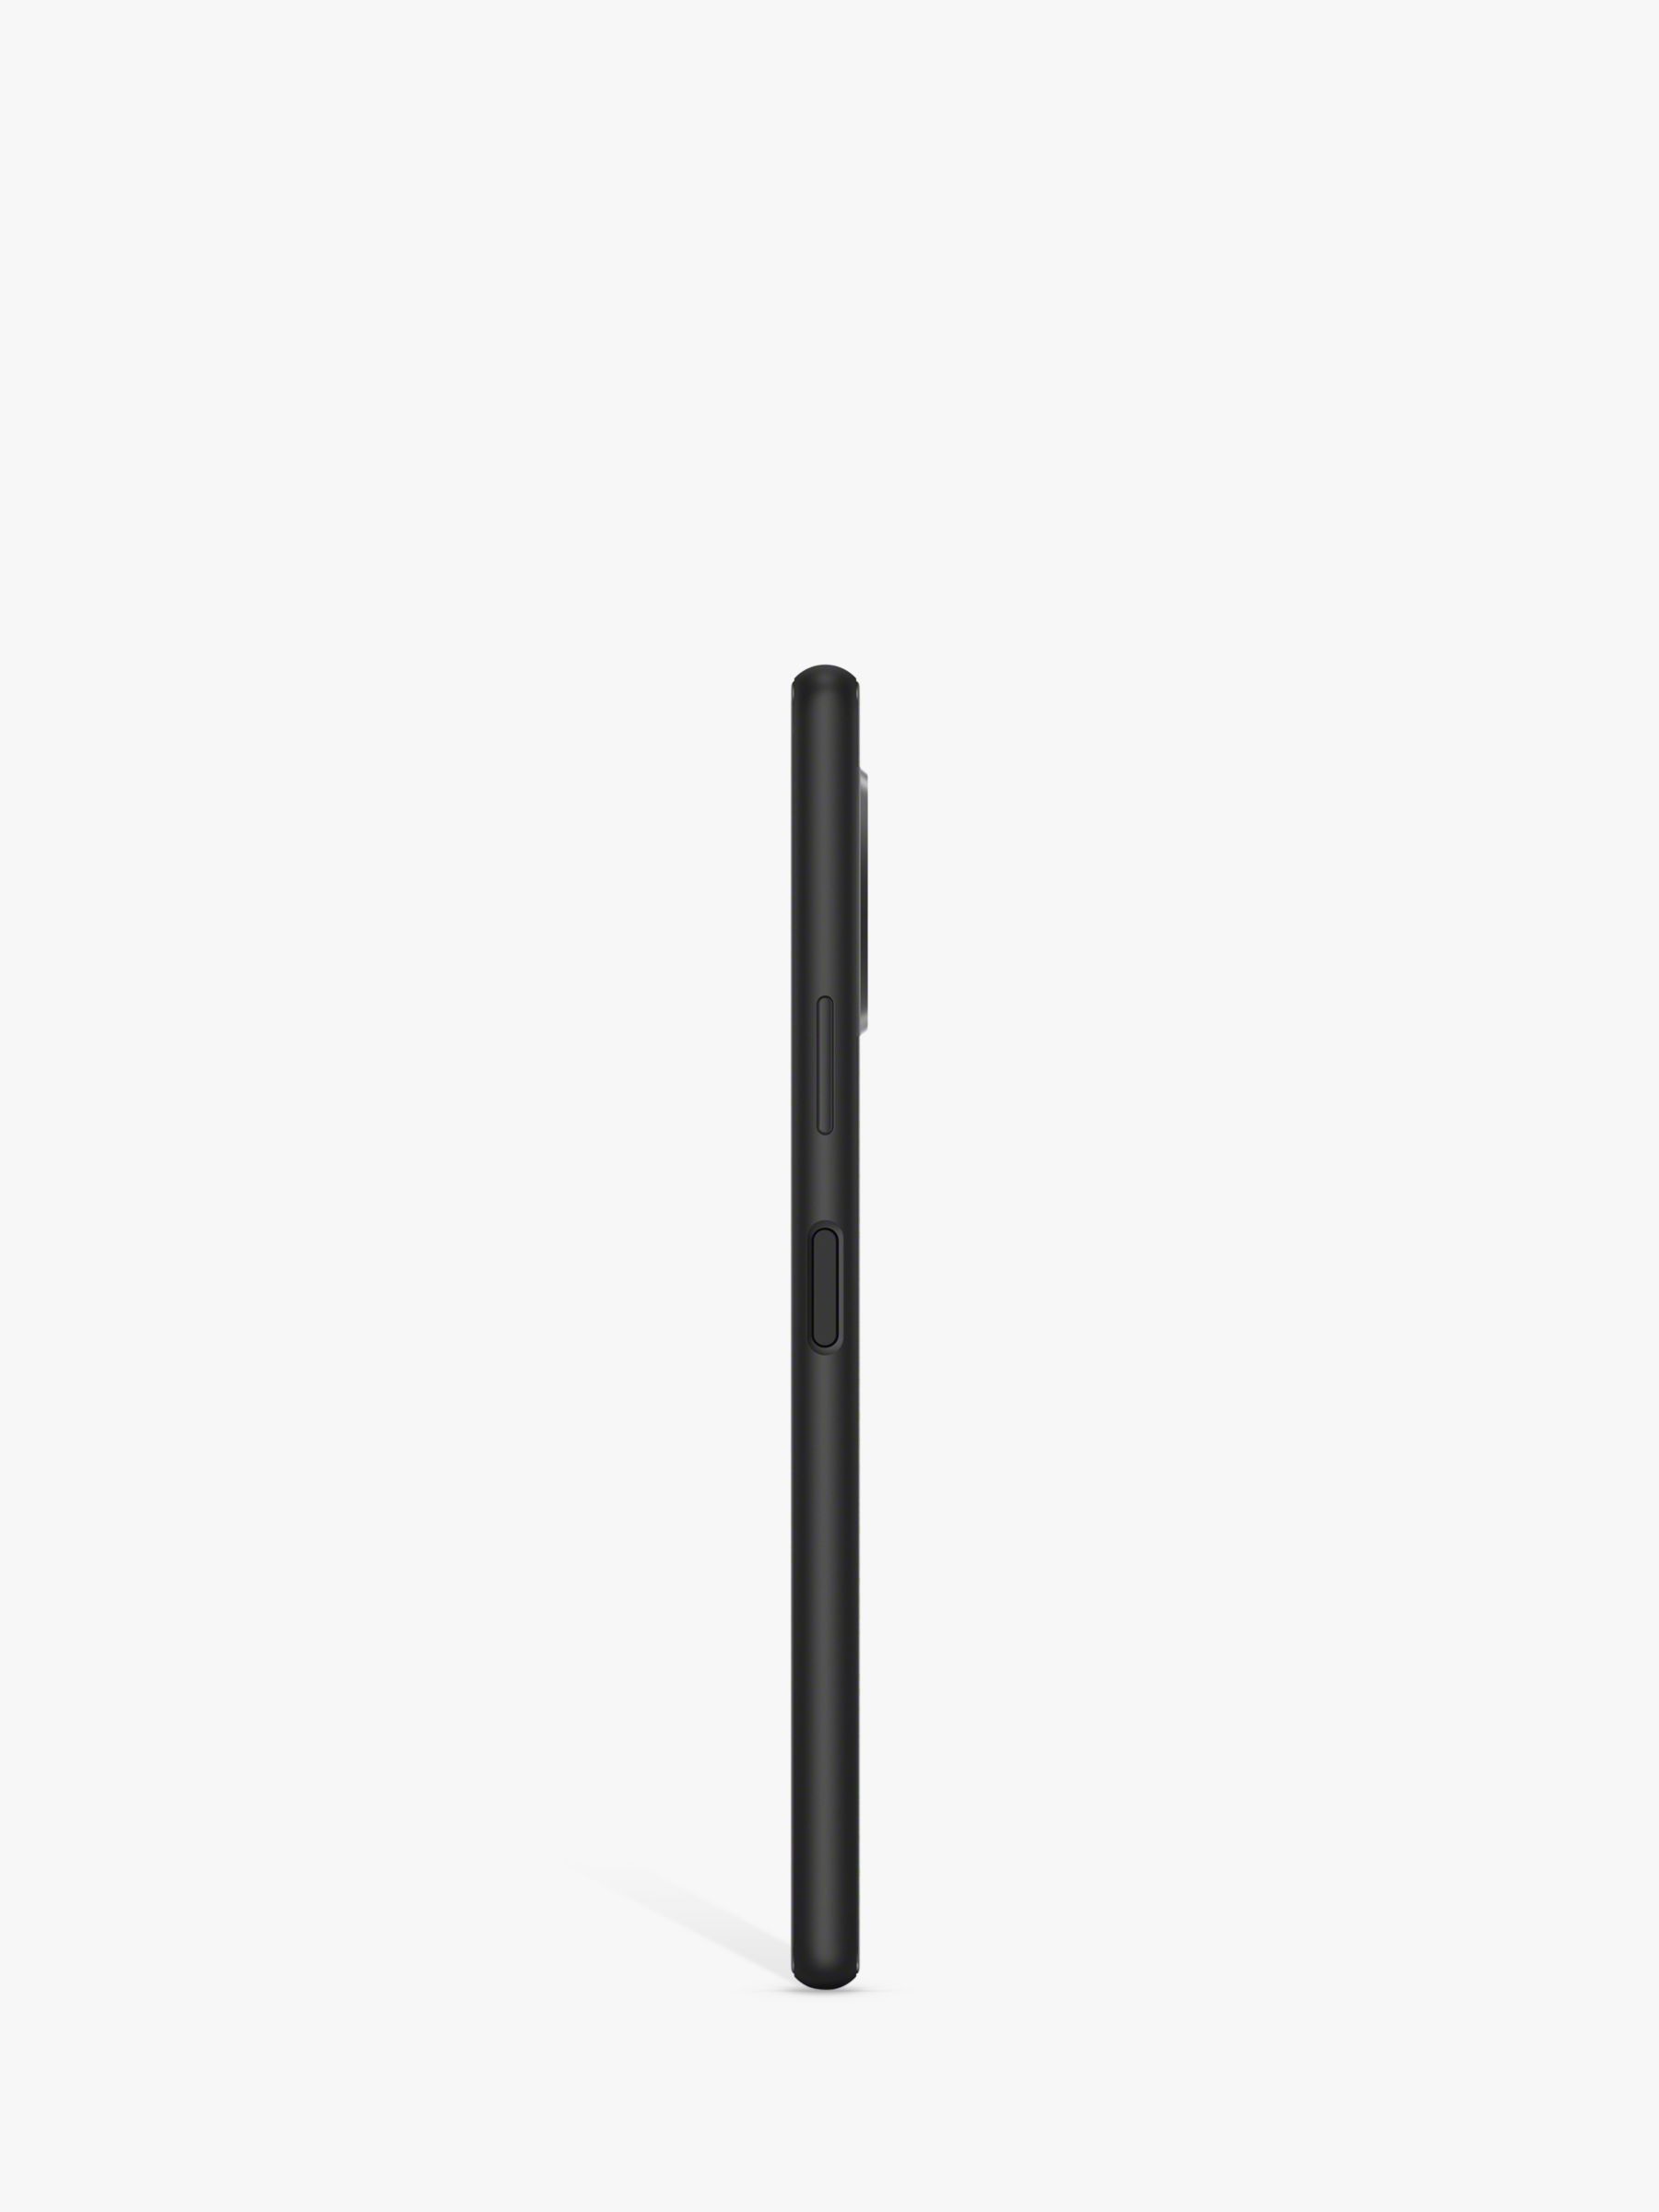 Sony Xperia 10 II Smartphone, Android, 6”, 4G LTE, SIM Free, 4GB RAM ...